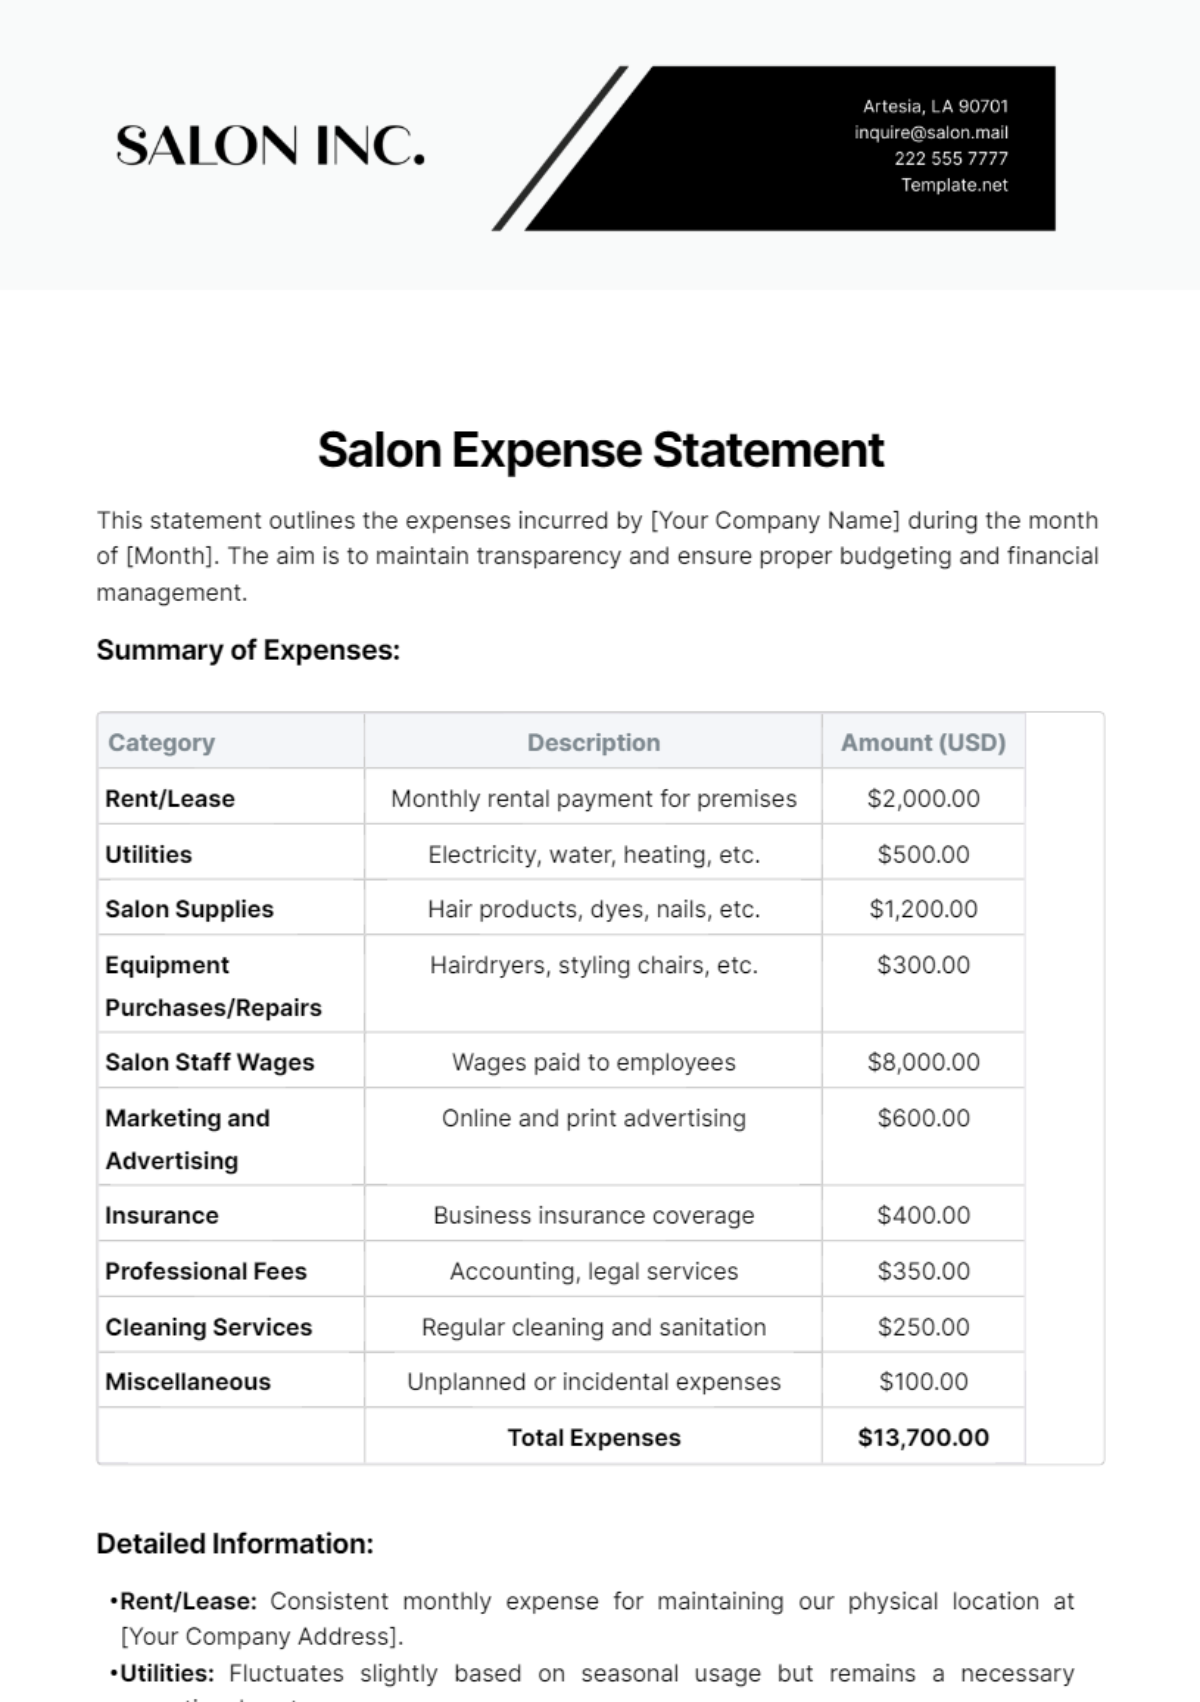 Salon Expense Statement Template